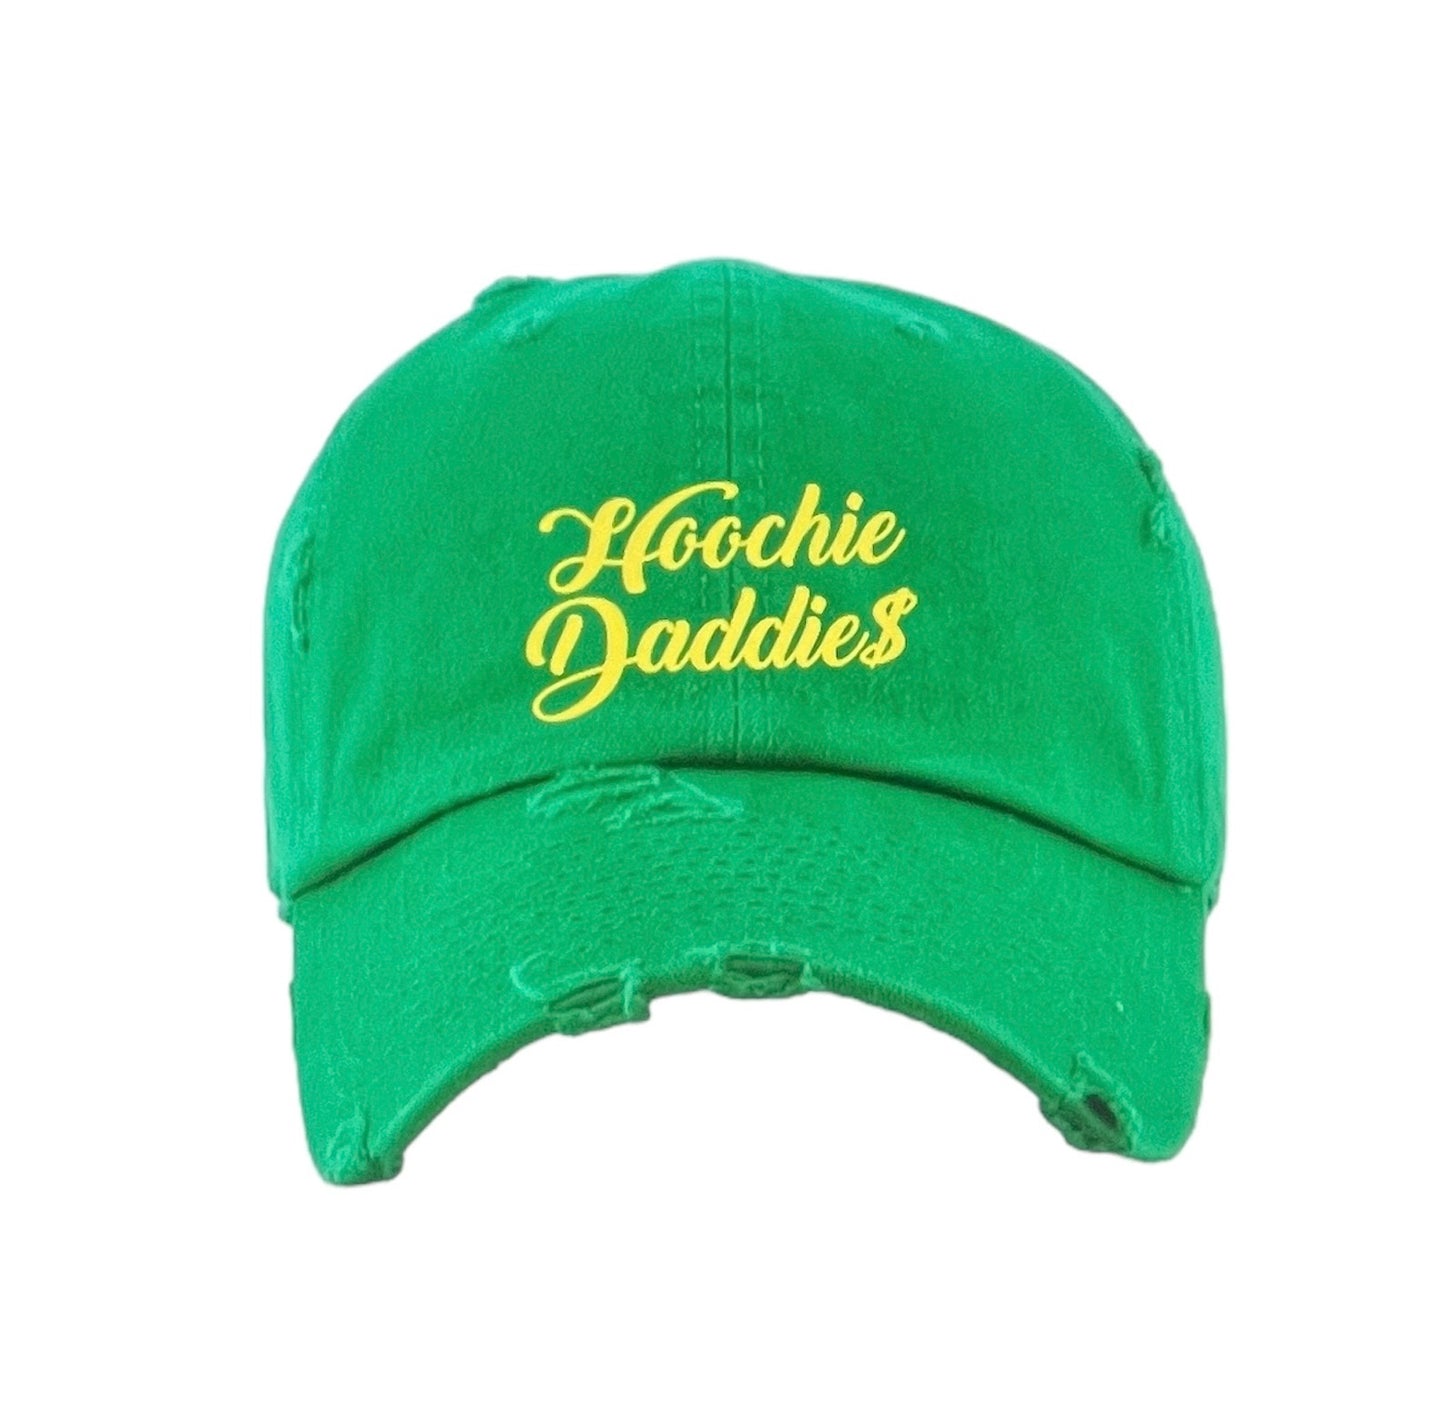 A Hoochie Daddies Hat Green w/ Yellow Lettering